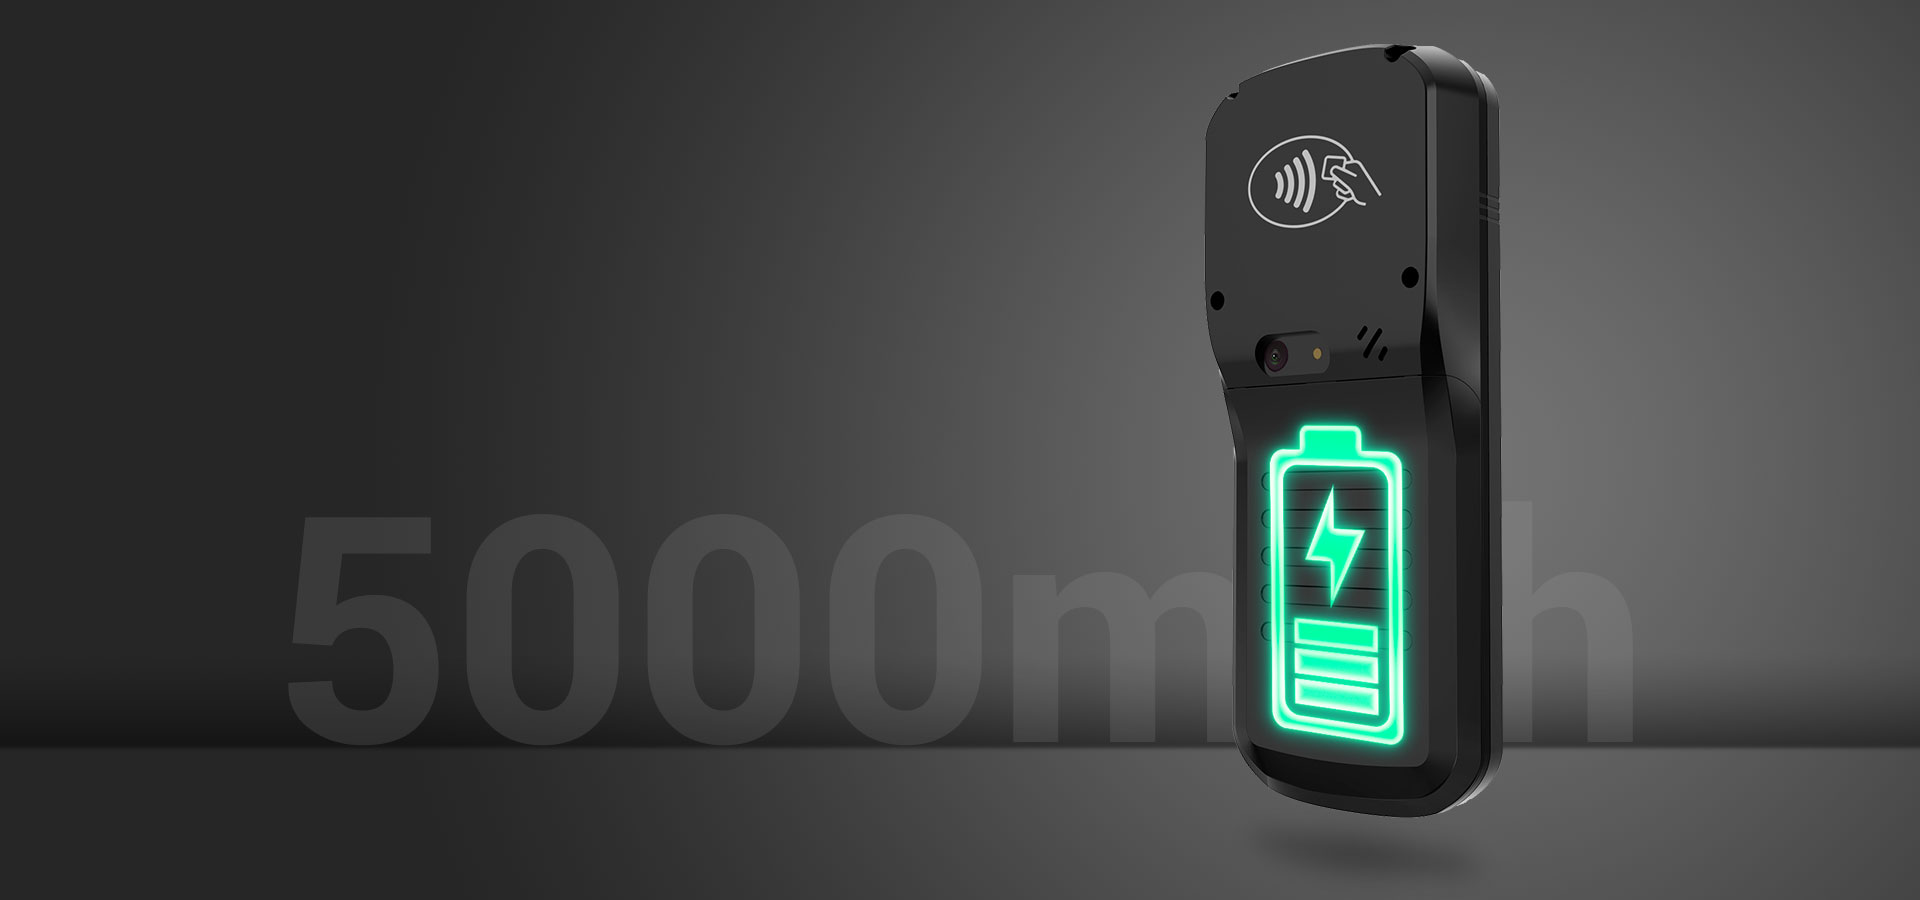 5000mAh Big Battery Android OS handheld biometric device